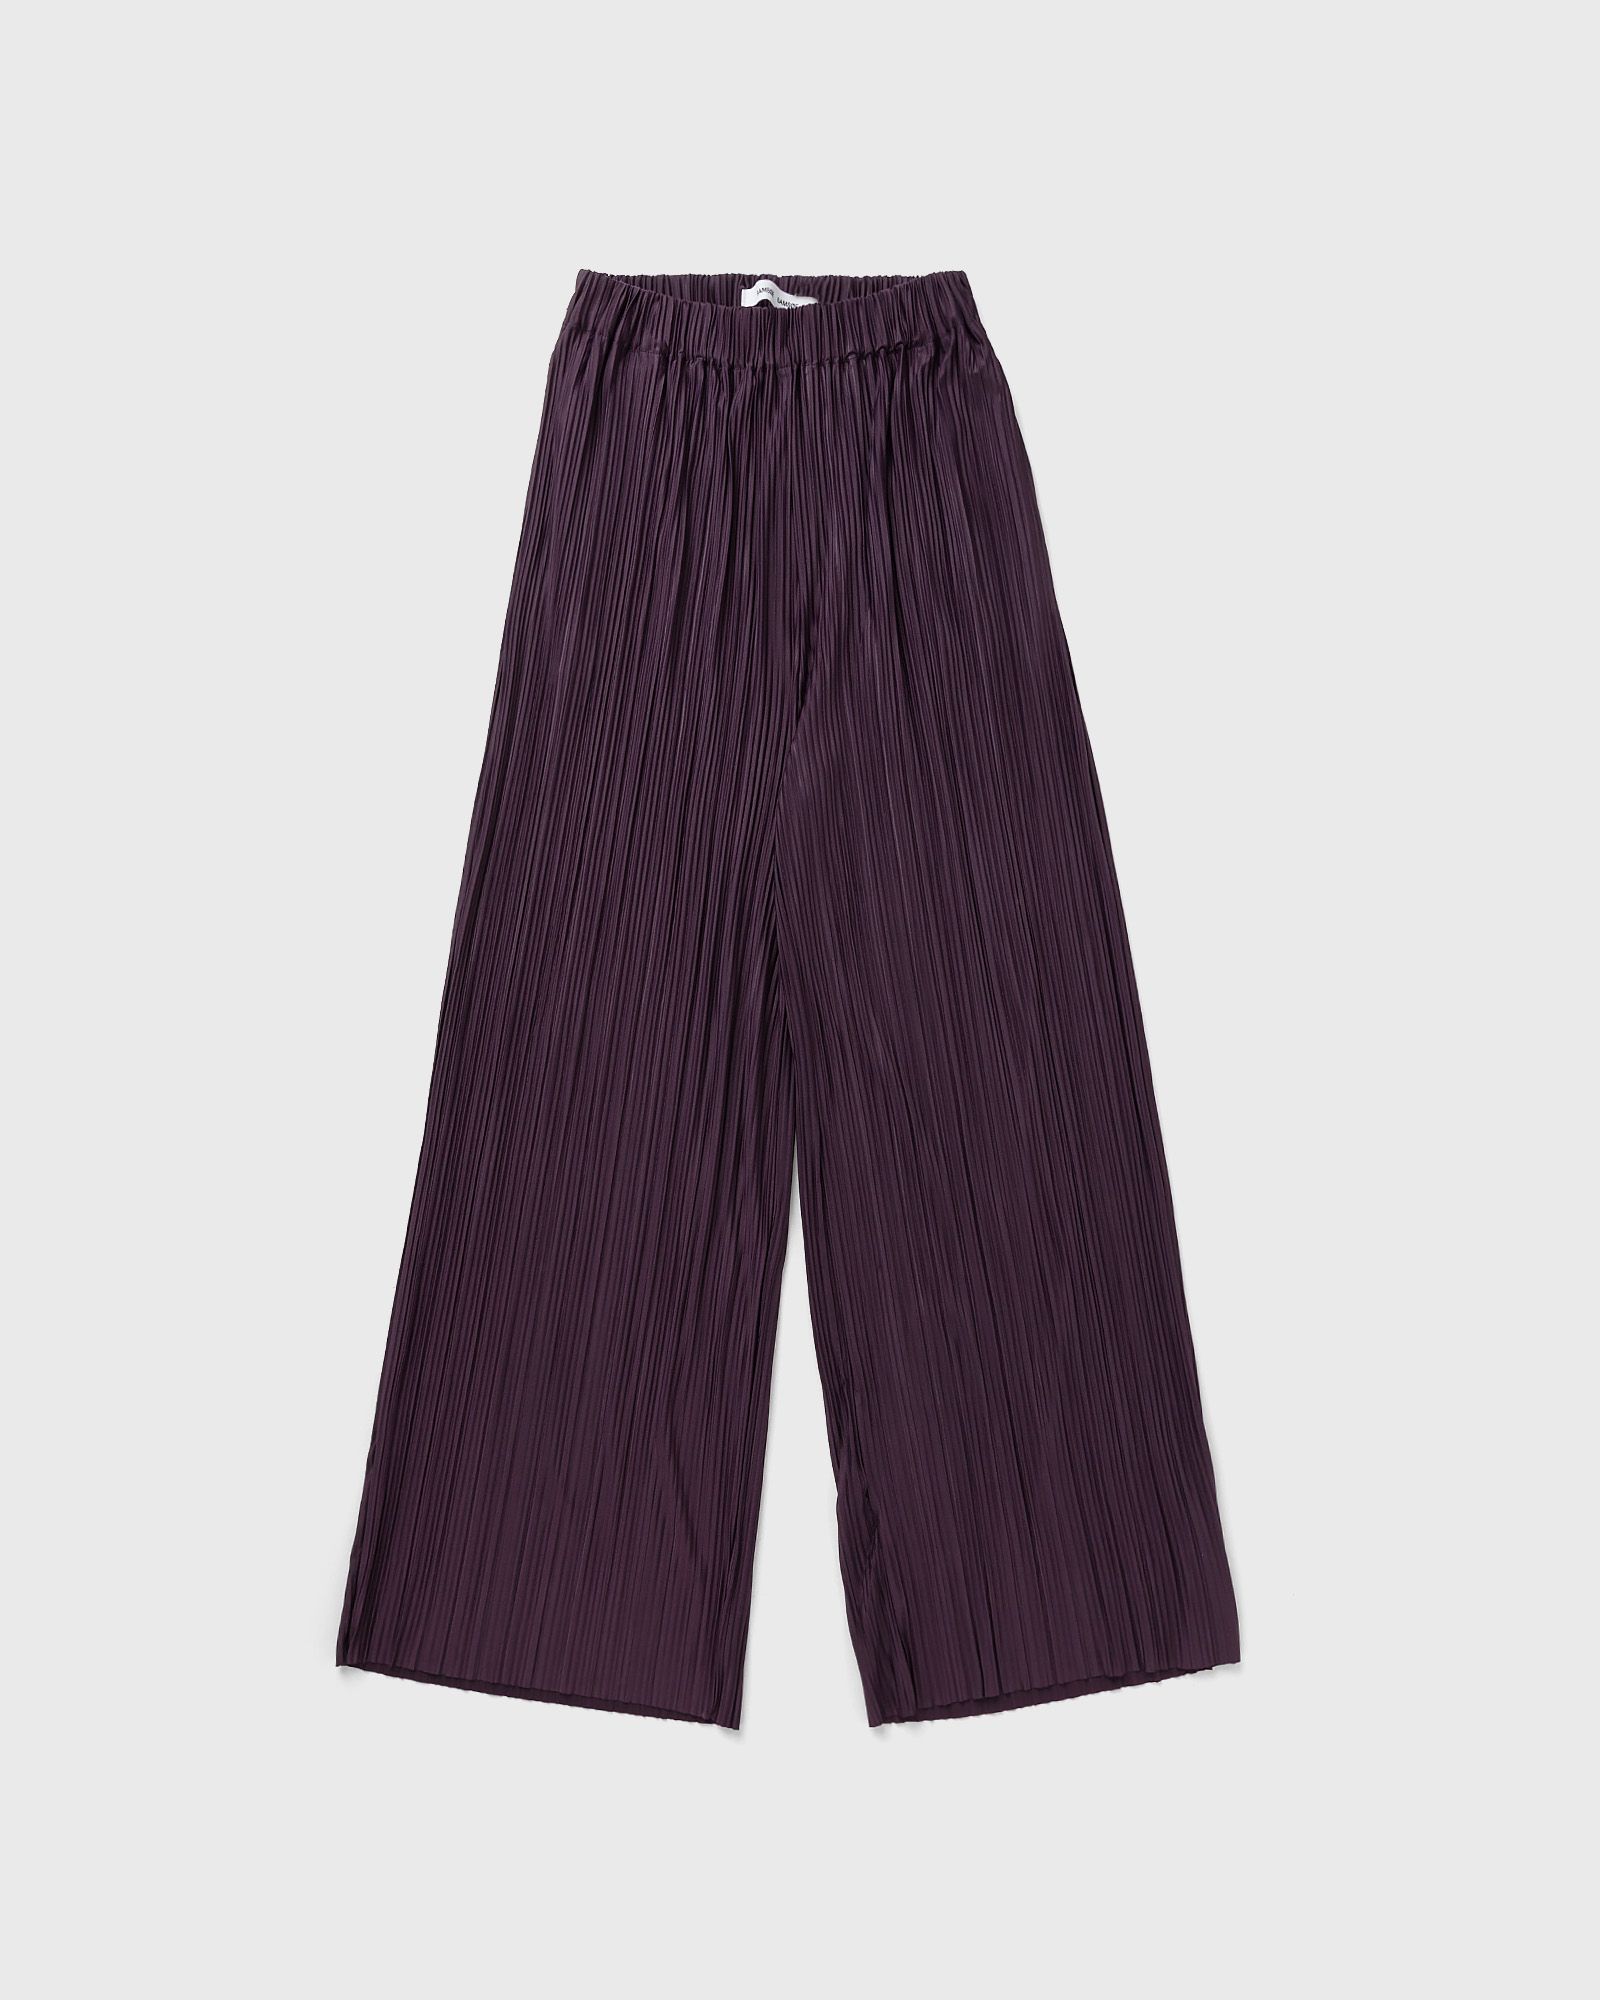 Samsøe & Samsøe - uma trousers 10167 women casual pants purple in größe:l